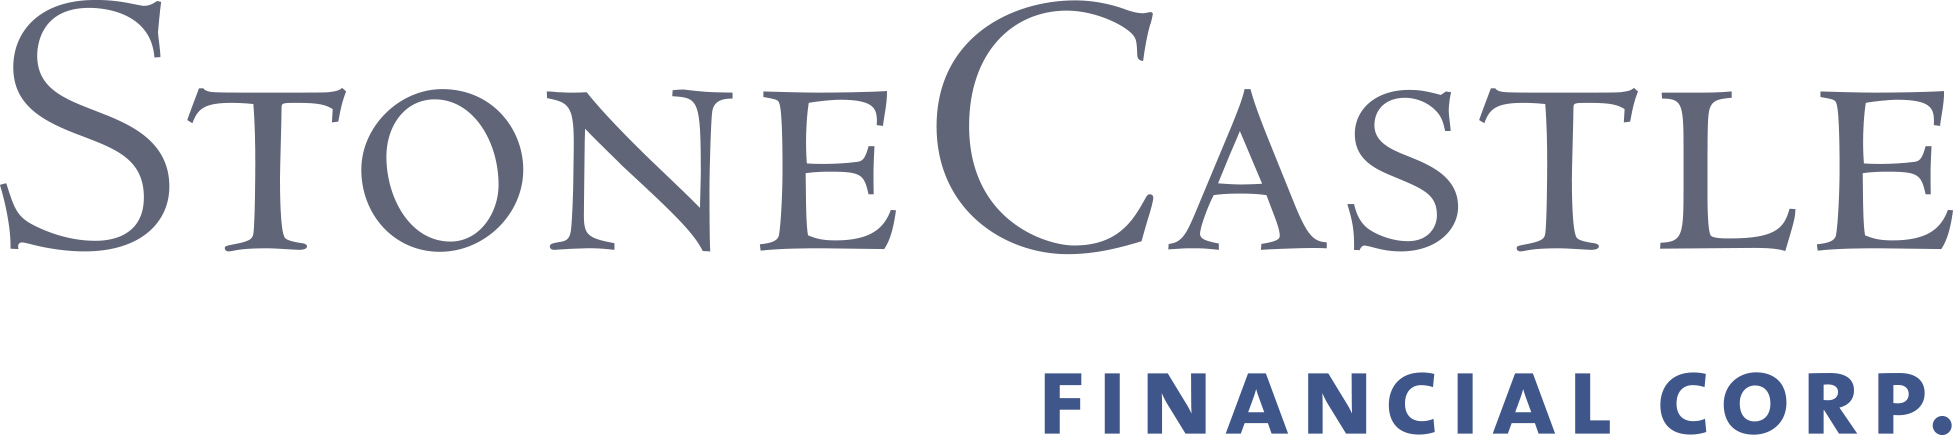 StoneCastle Financial Corporation